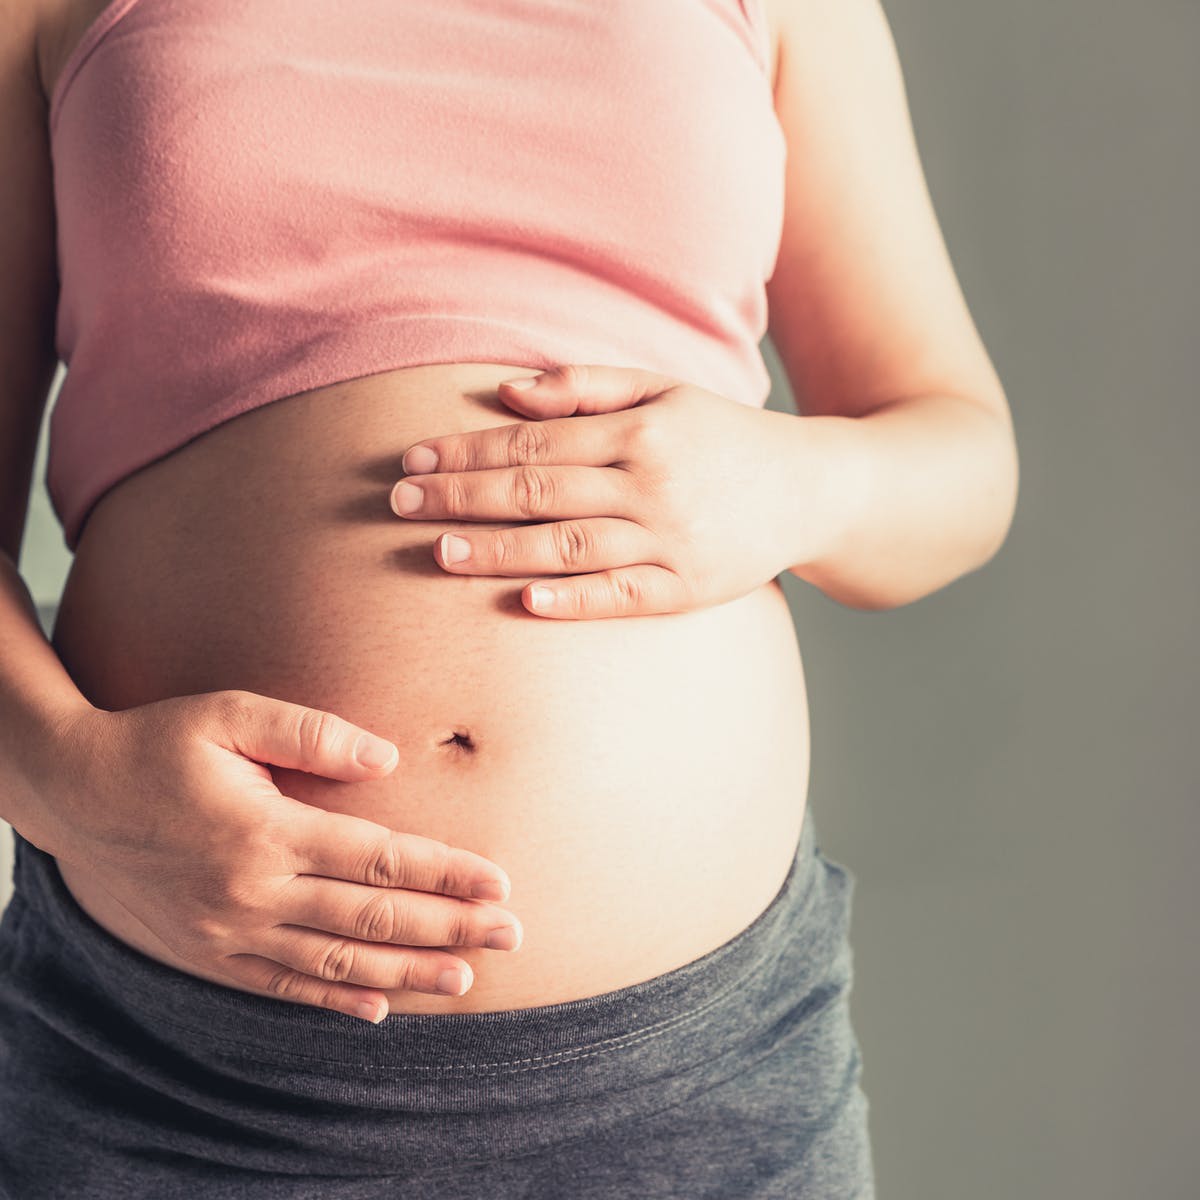 Pregnancy-a journey to motherhood